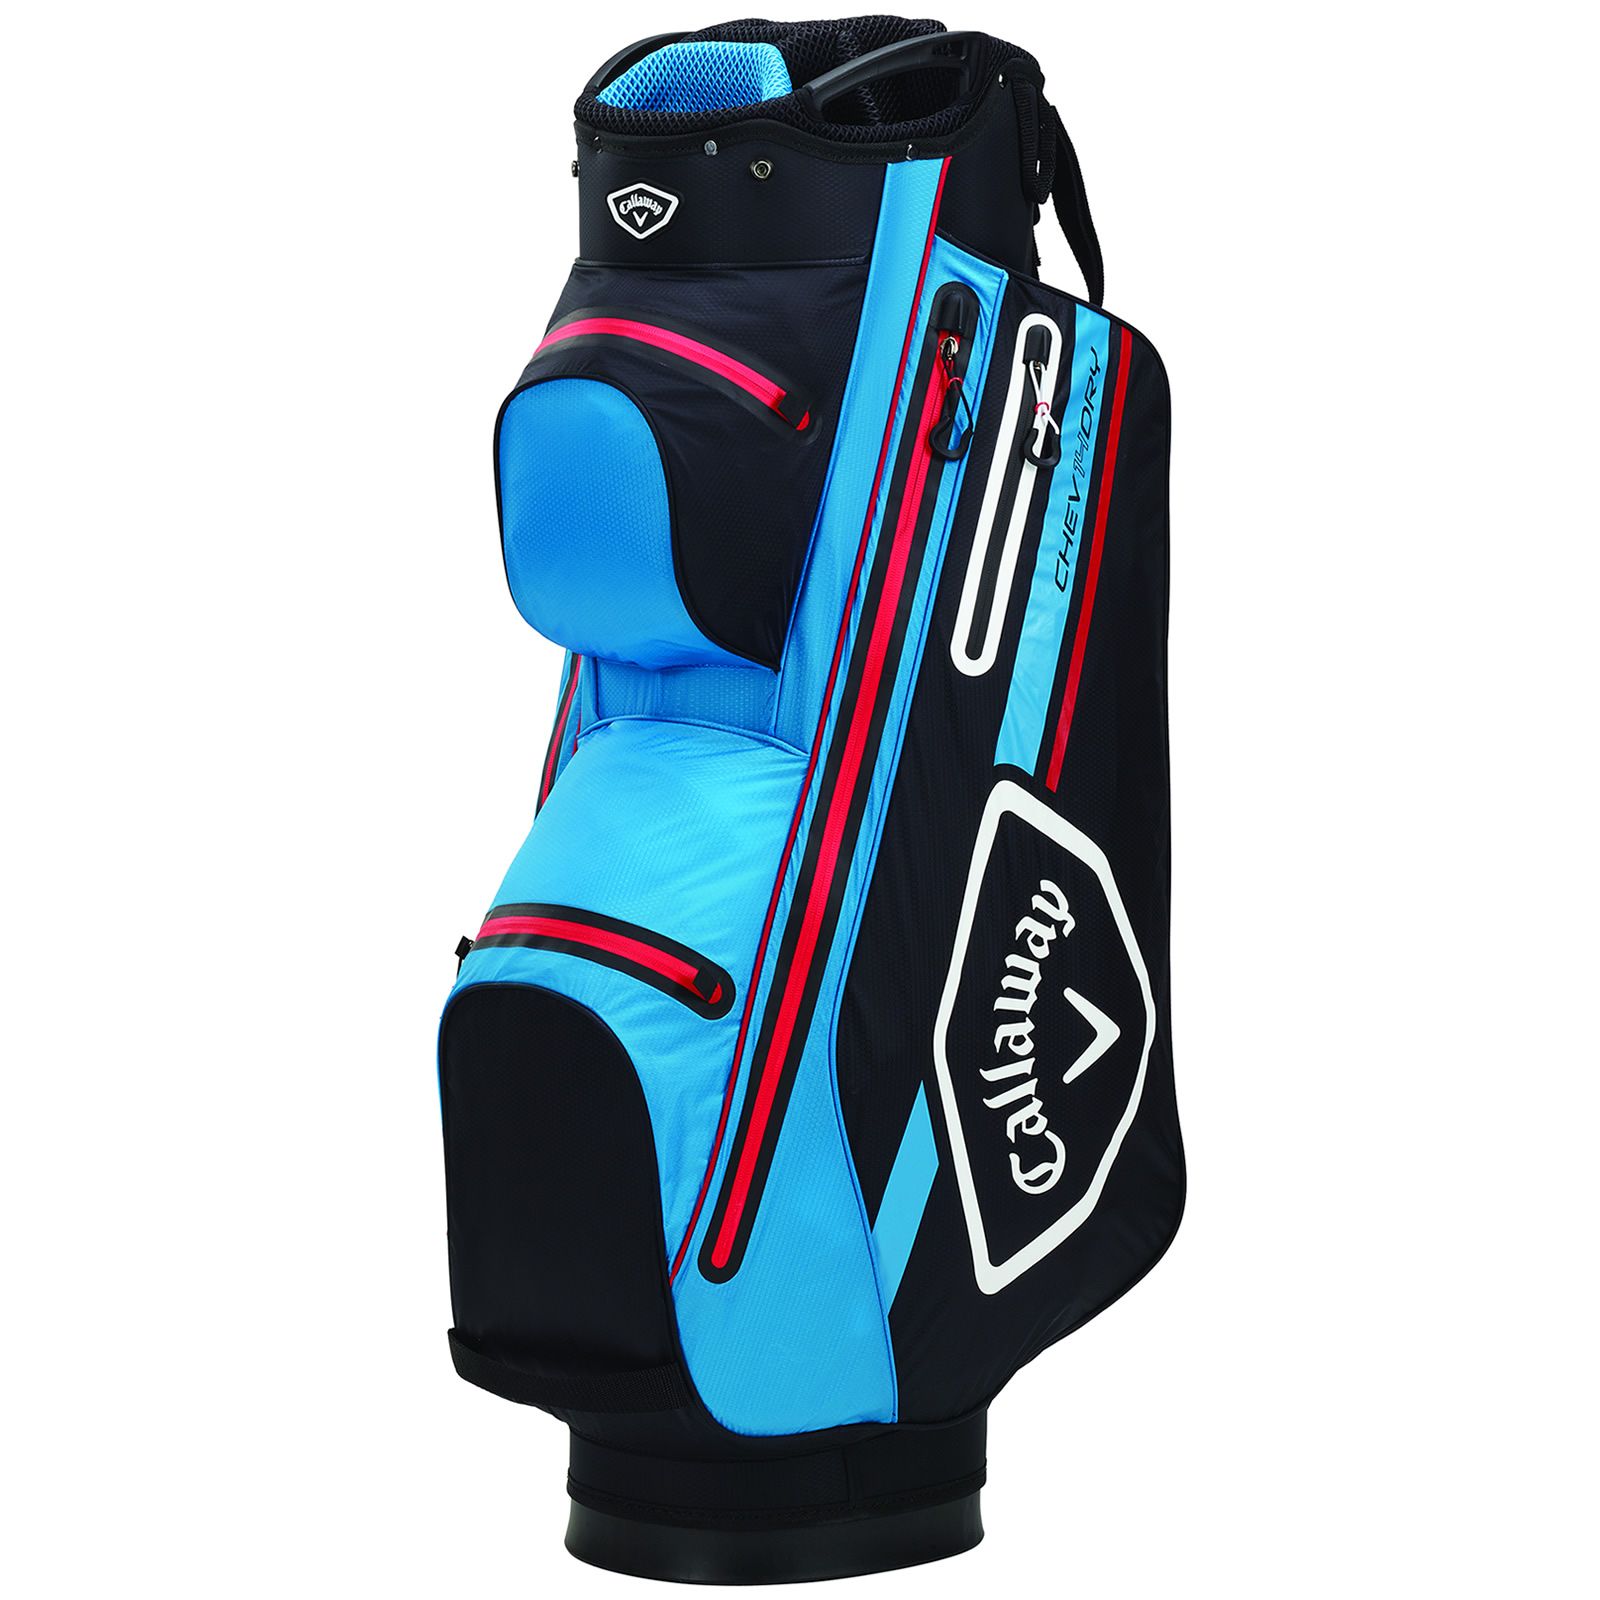 golf travel bag for sale near me